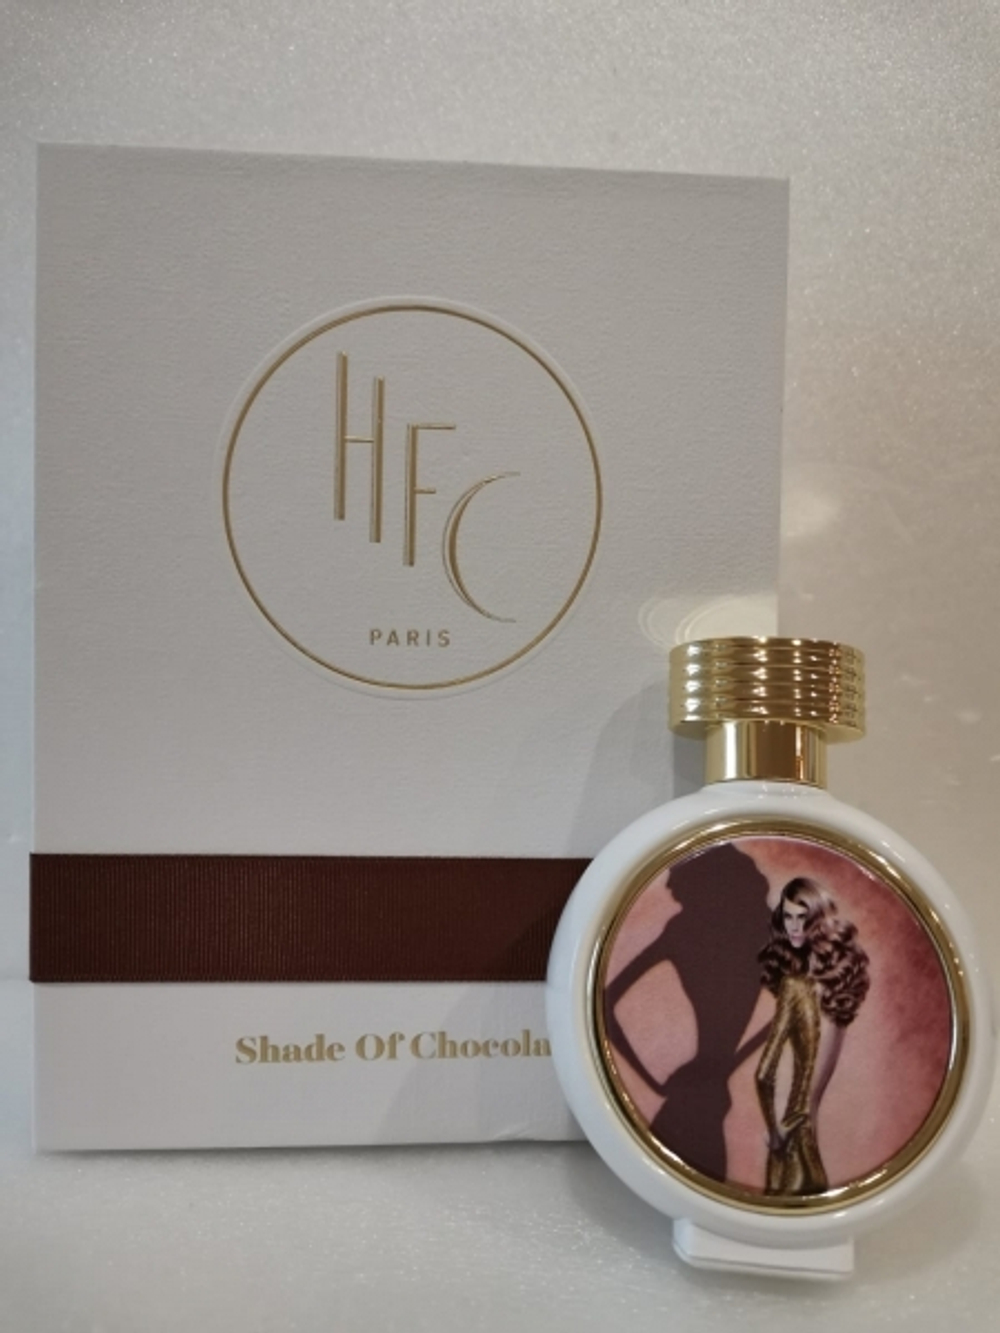 HFC Shade Of Chocolate